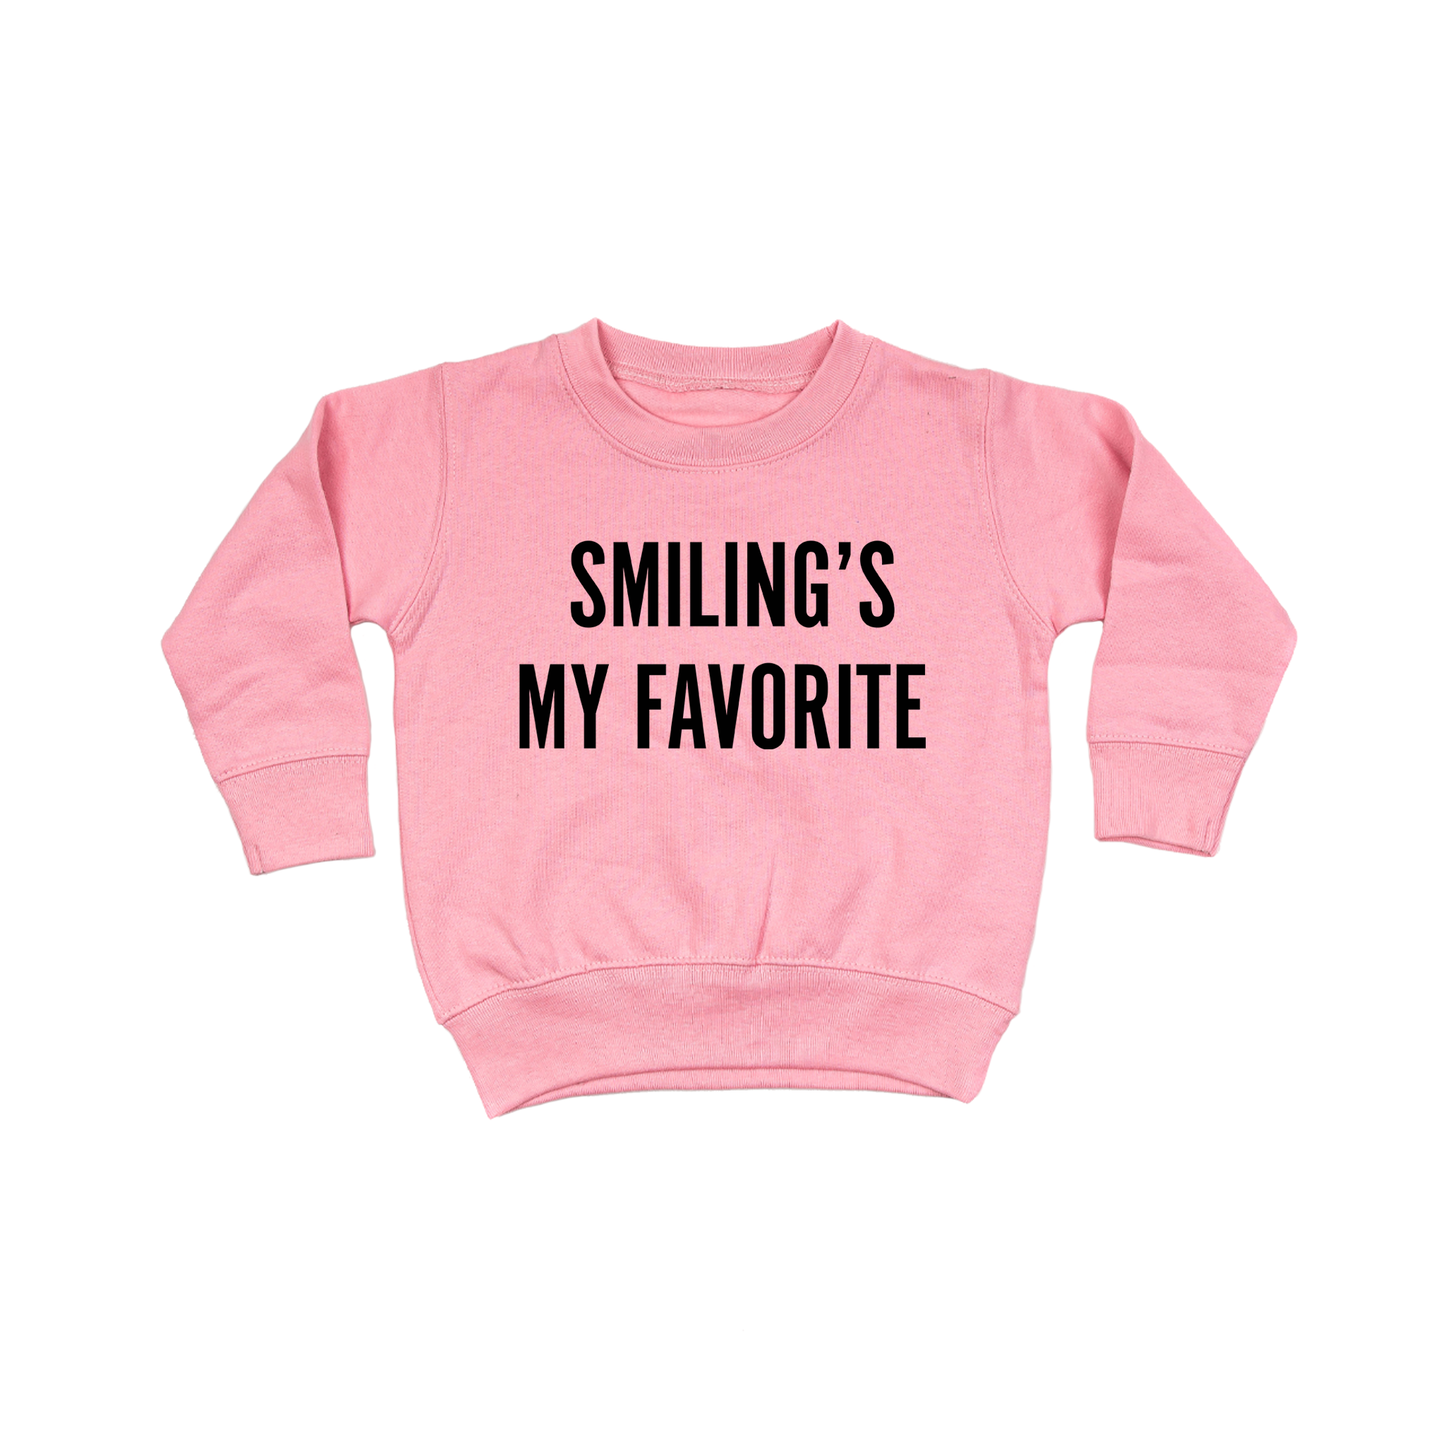 Smiling's My Favorite (Black) - Kids Sweatshirt (Pink)